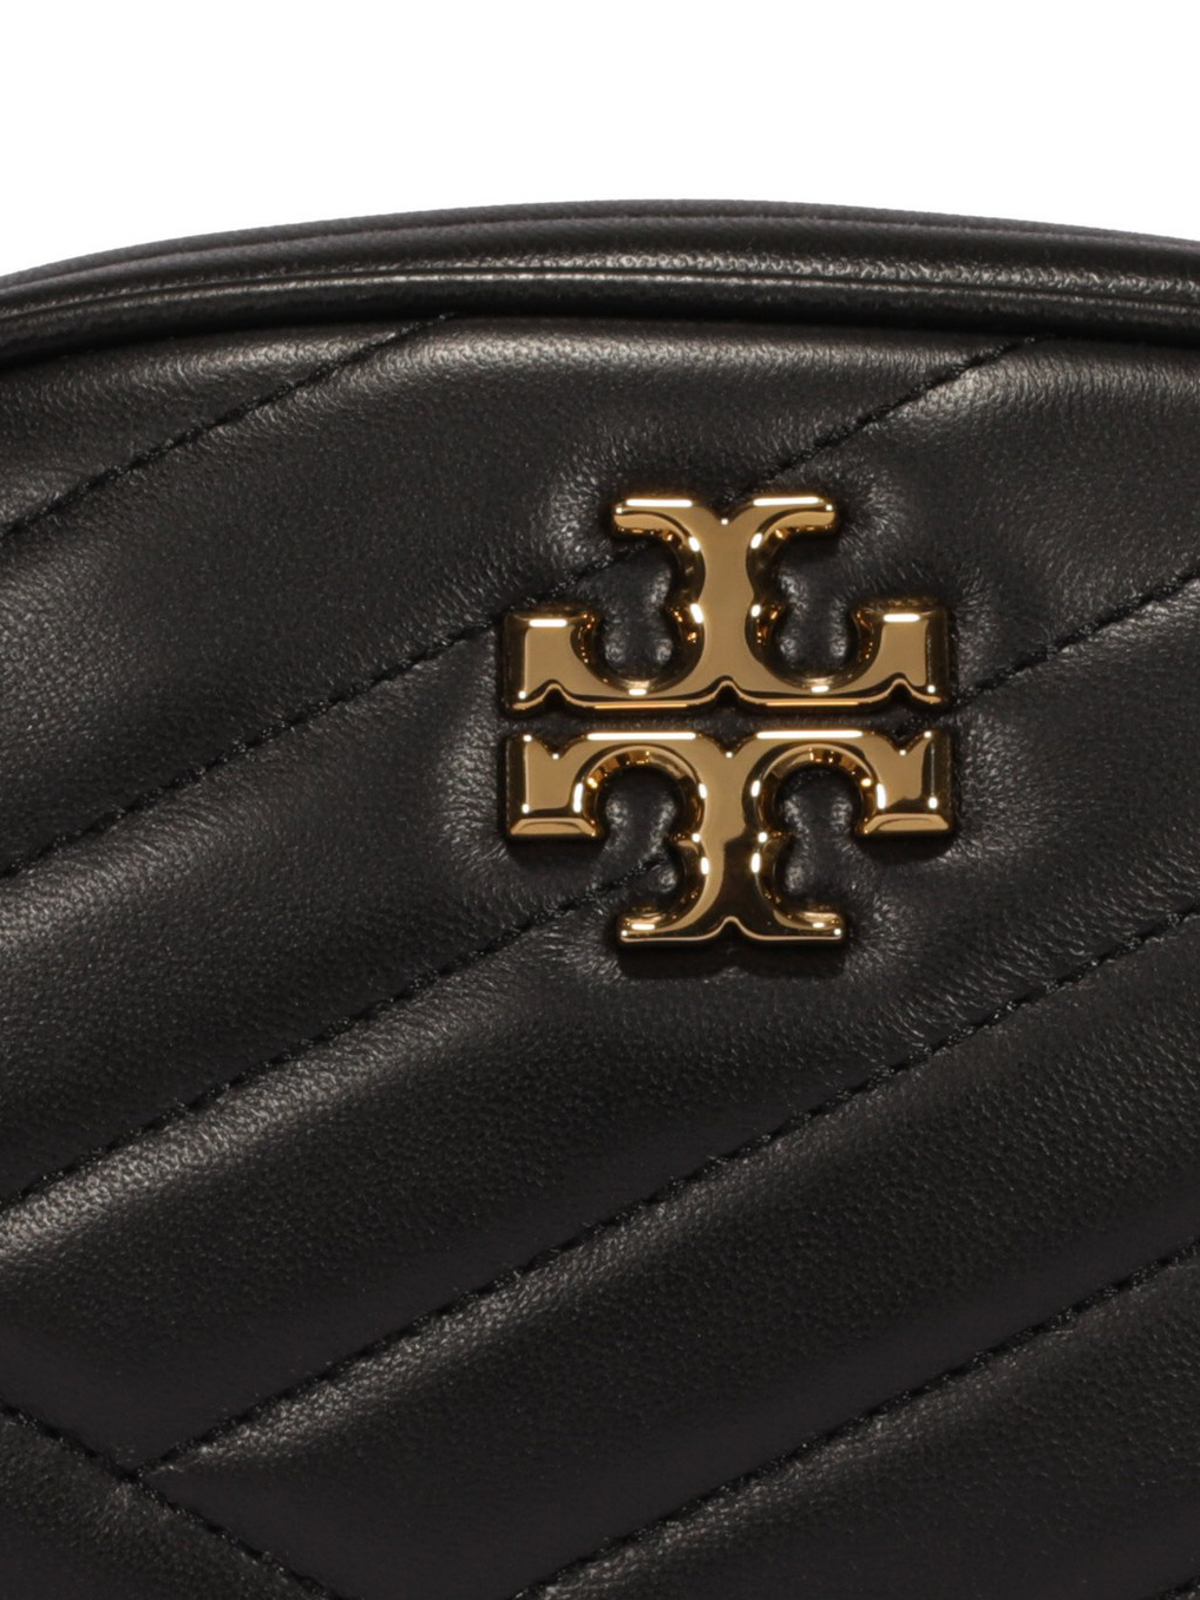  Tory Burch Women's Kira Chevron Small Camera Bag, Black, One  Size : Clothing, Shoes & Jewelry